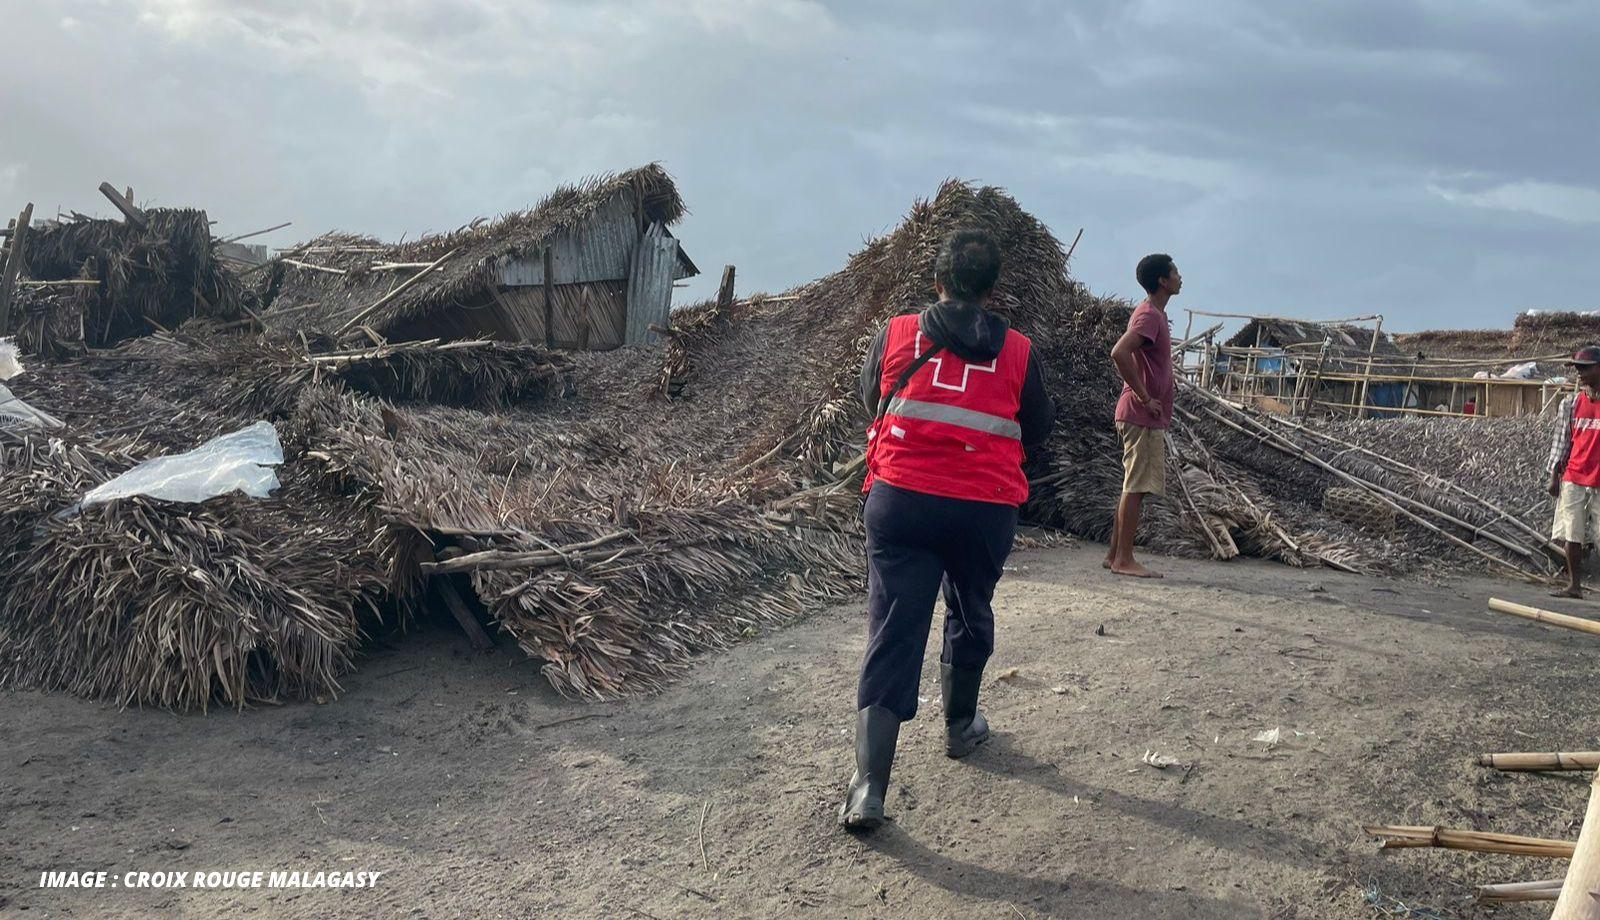 Croix rouge malagasy en action apre s le cyclone freddy